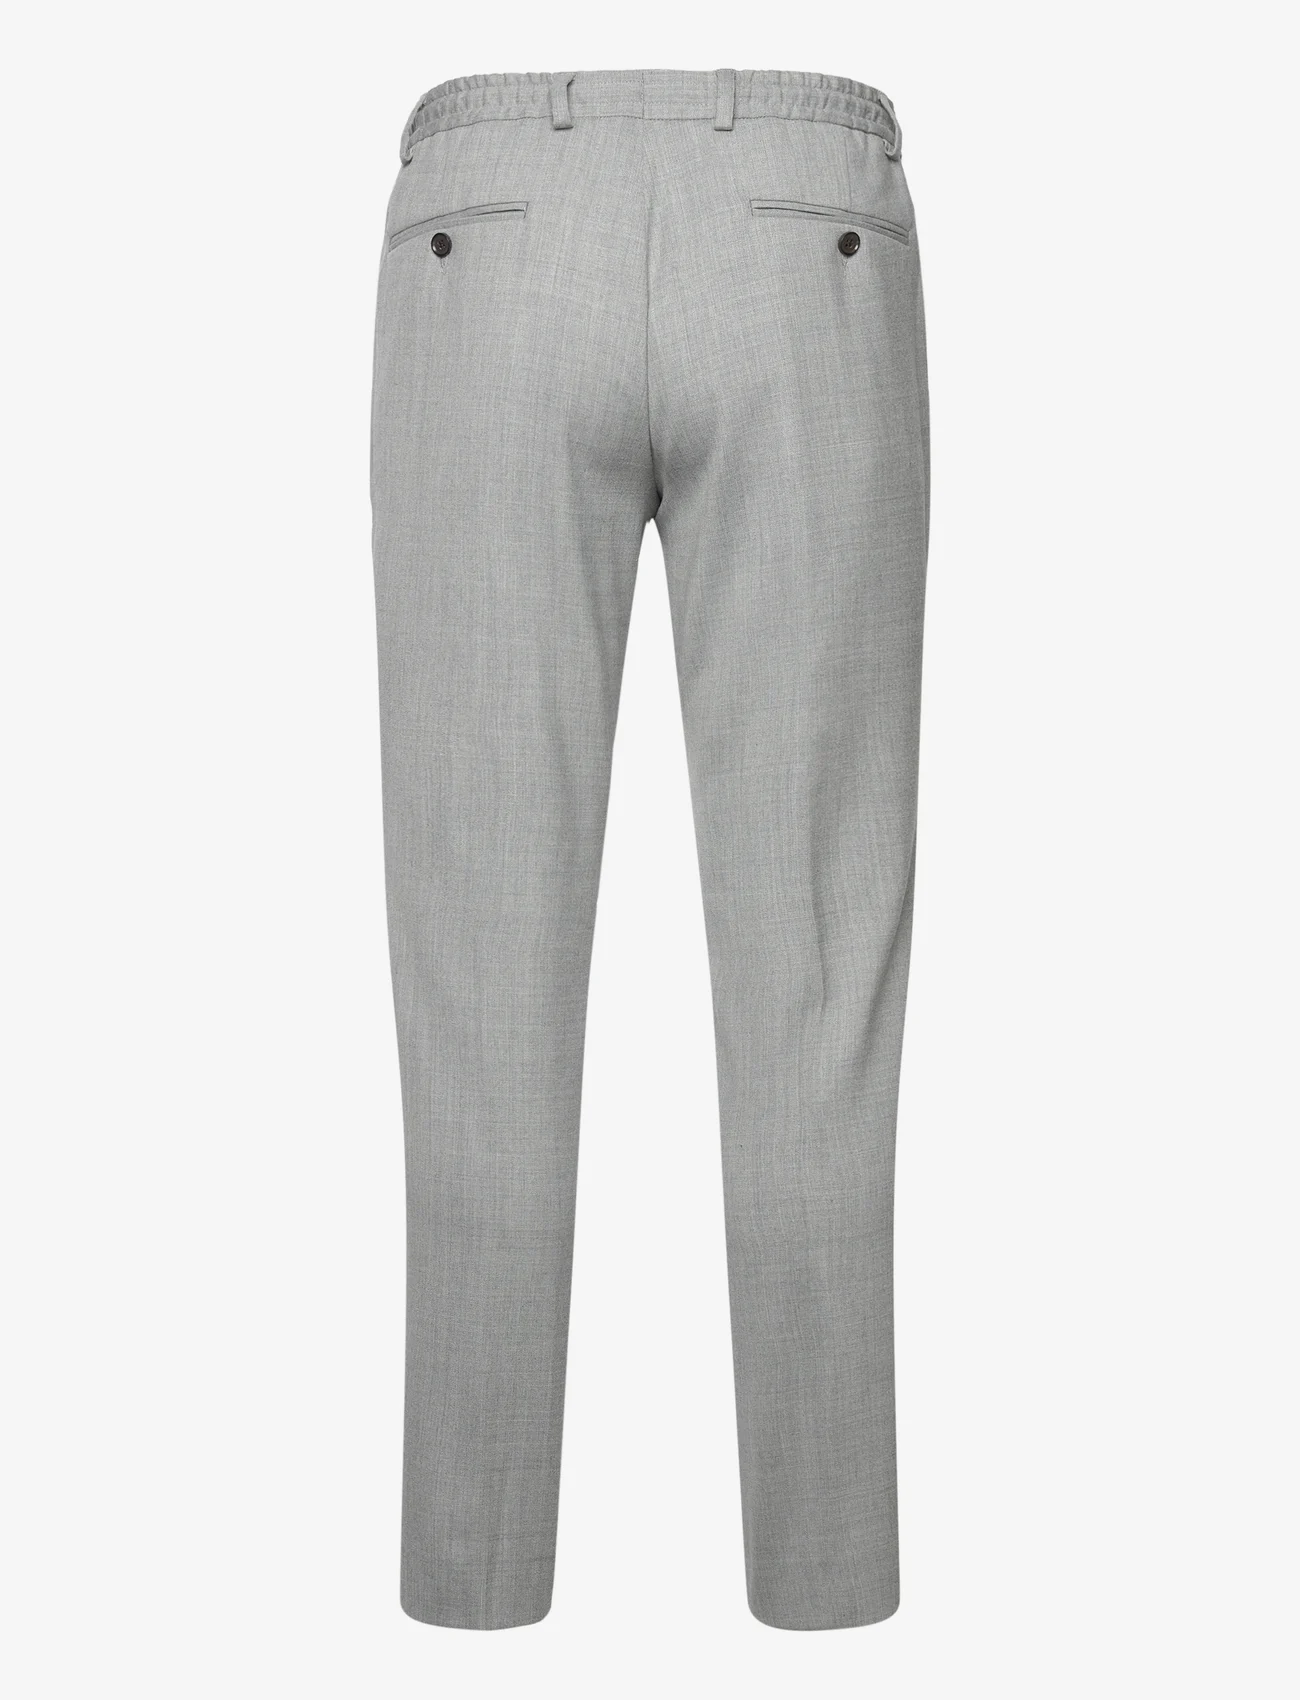 Michael Kors - FLANNEL PANT - pantalons - light grey - 1